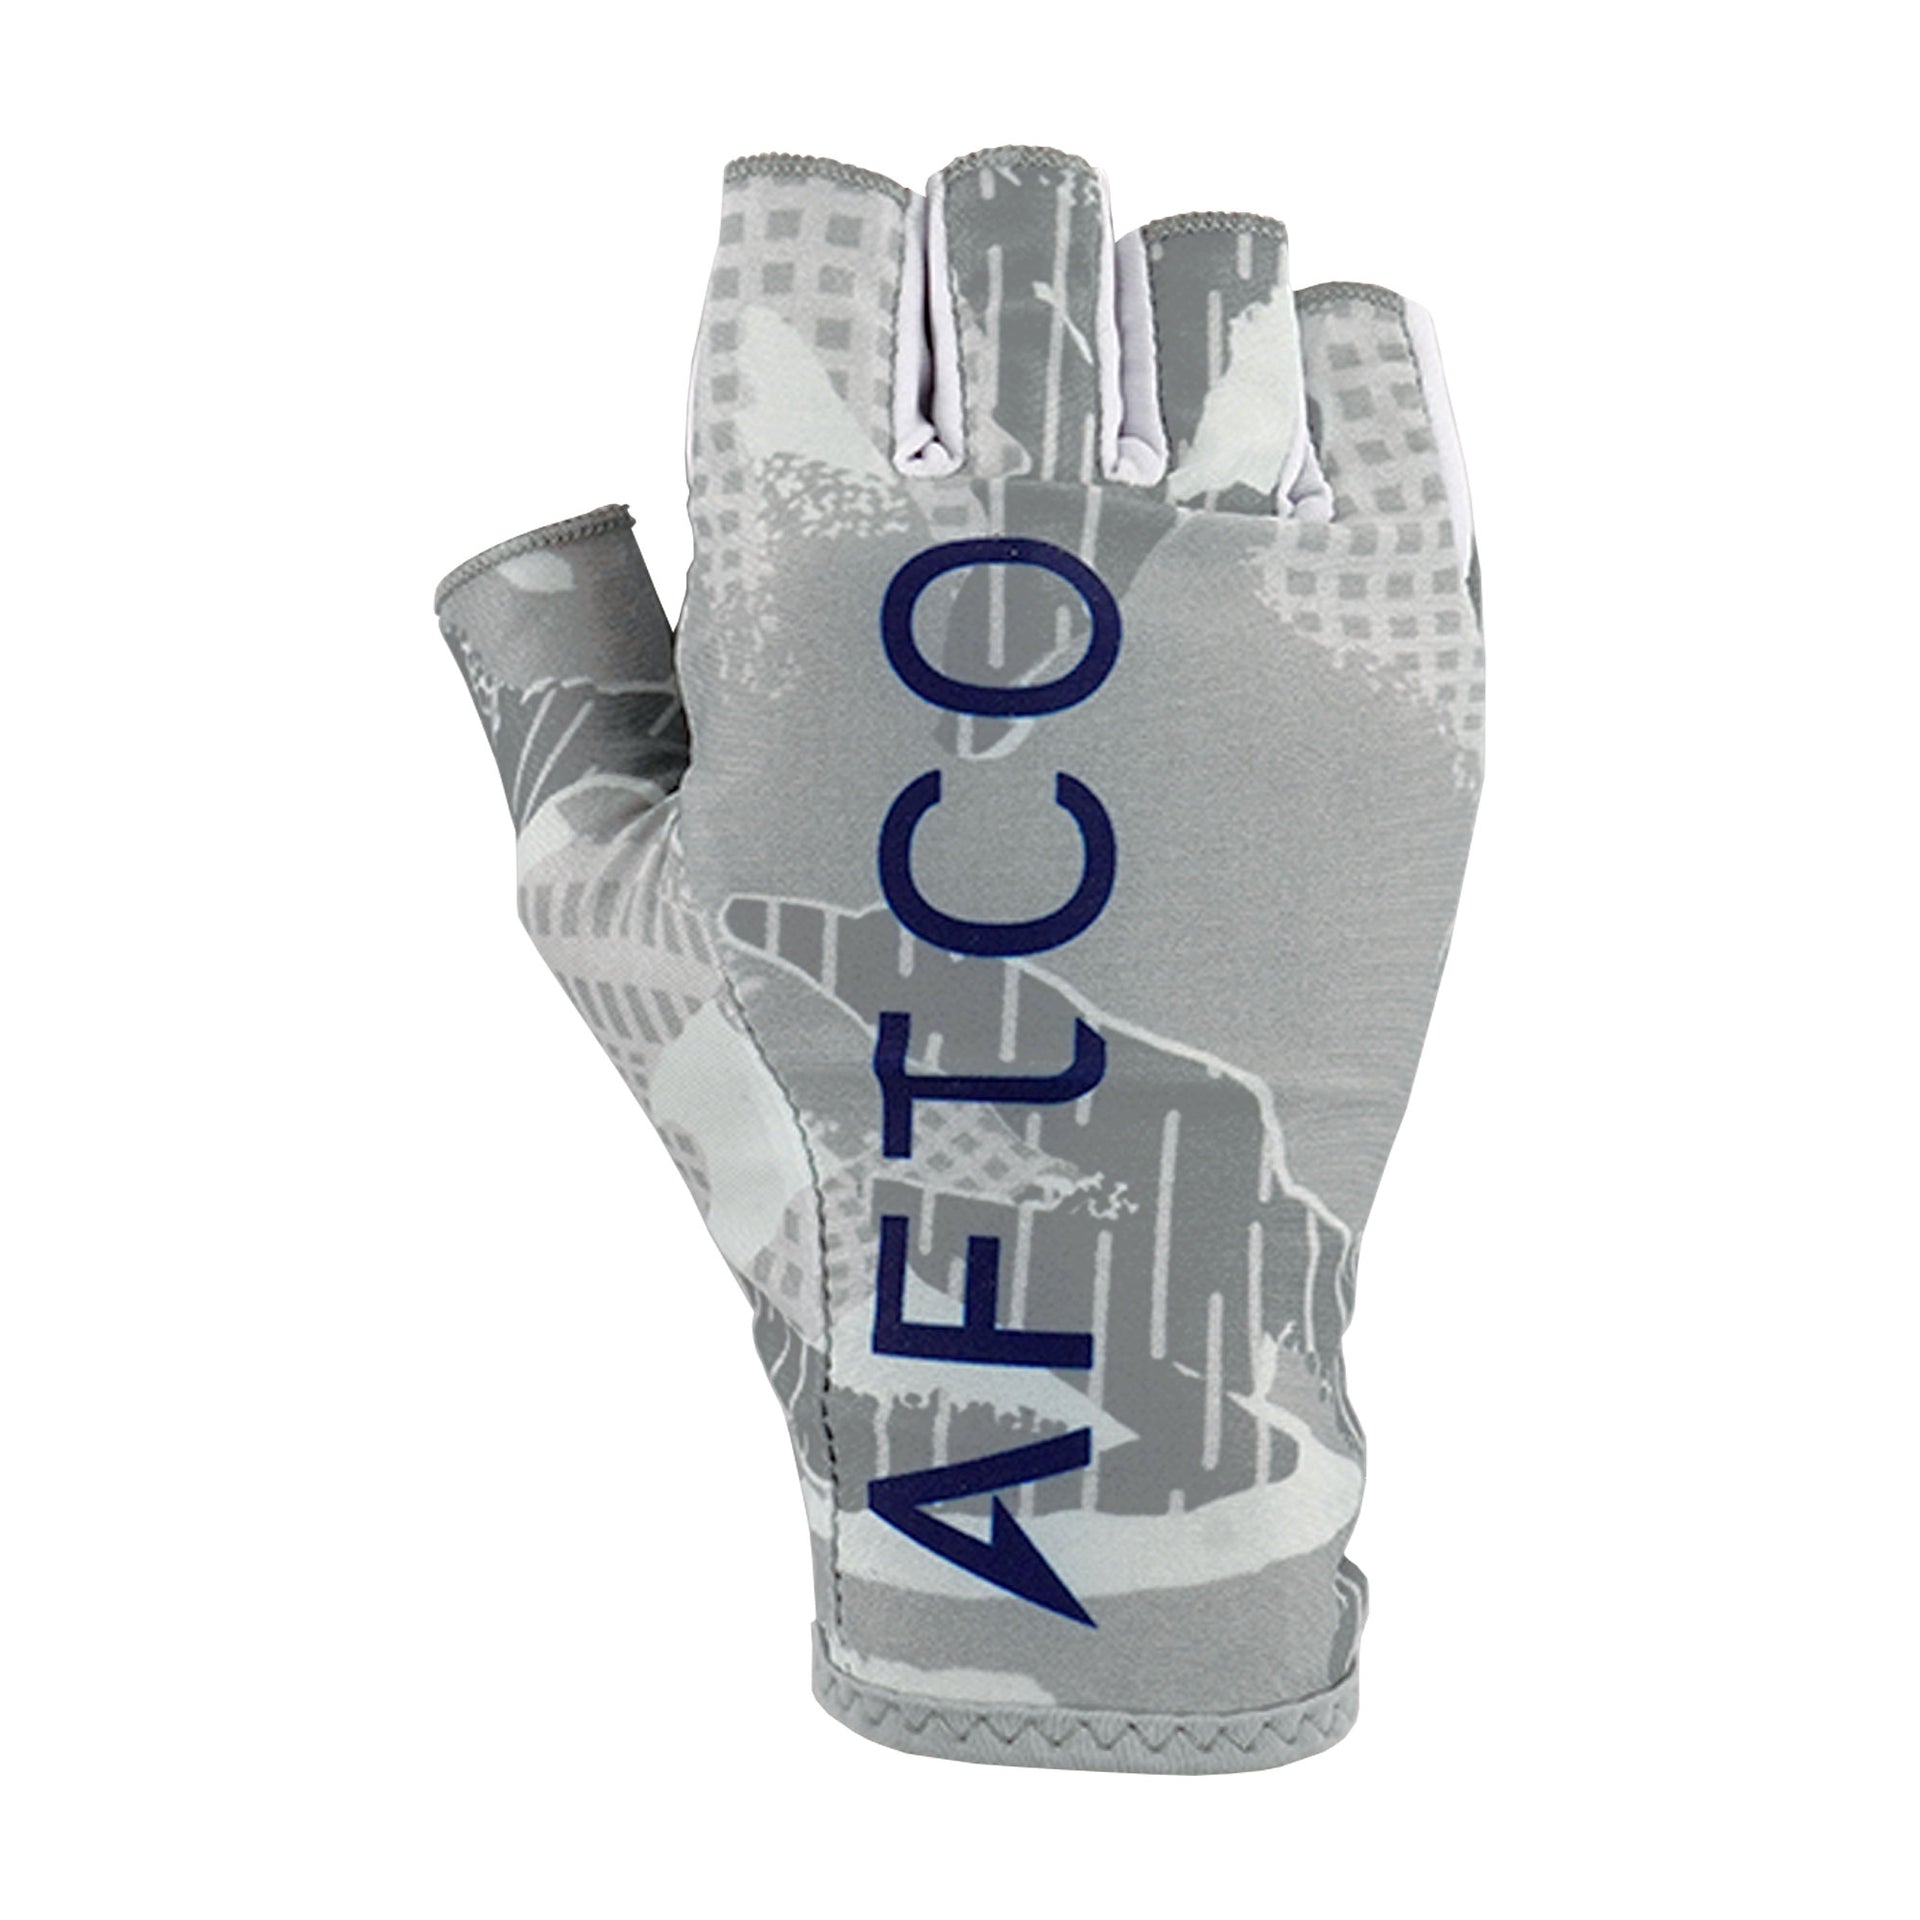 Buy AFTCO Bluefever Leader and Release Gloves online at Marine